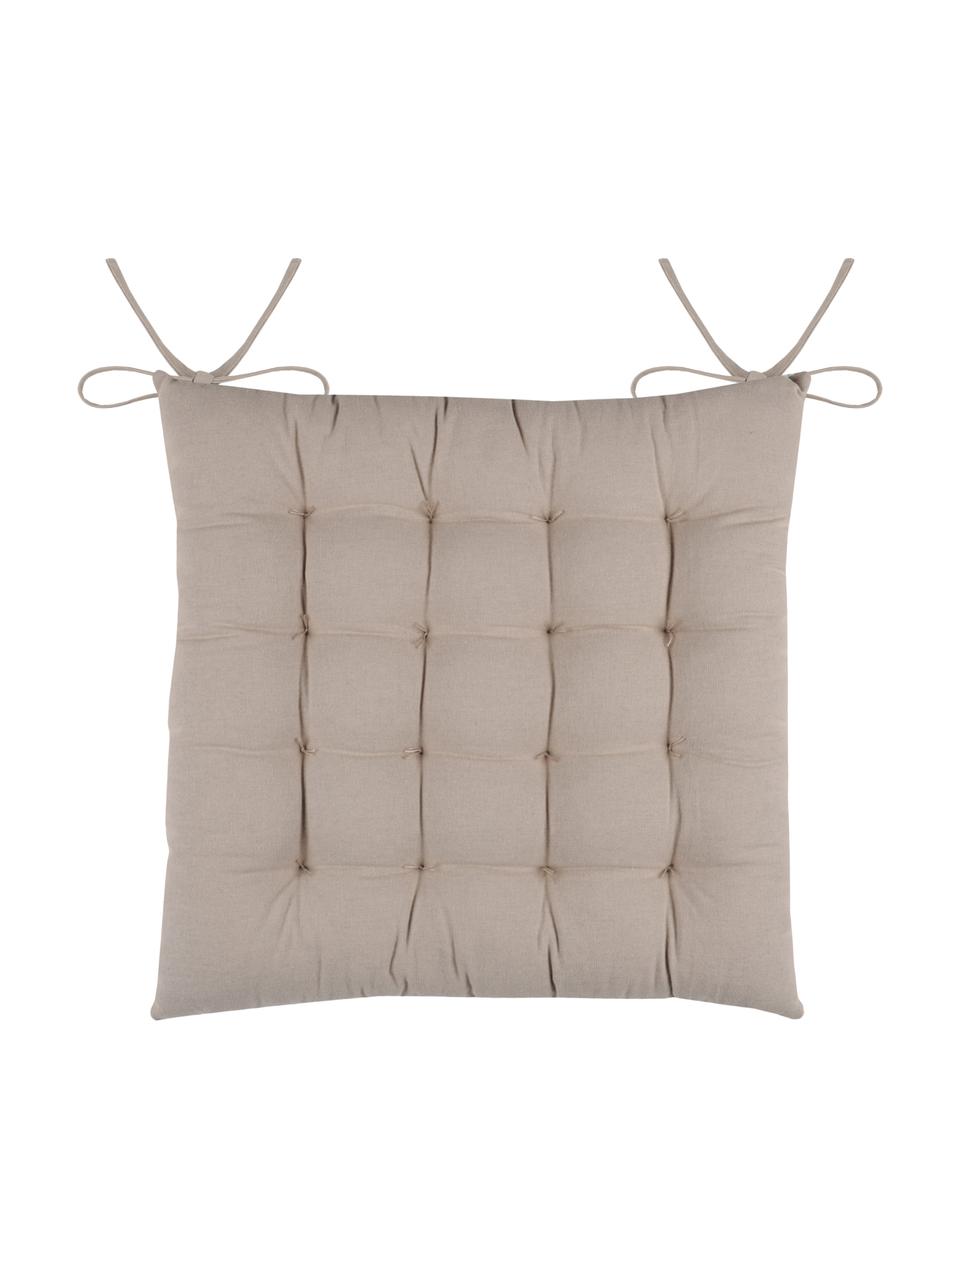 Cuscino sedia reversibile beige/bianco Galette, 100% cotone, Beige, bianco, Larg. 40 x Lung. 40 cm